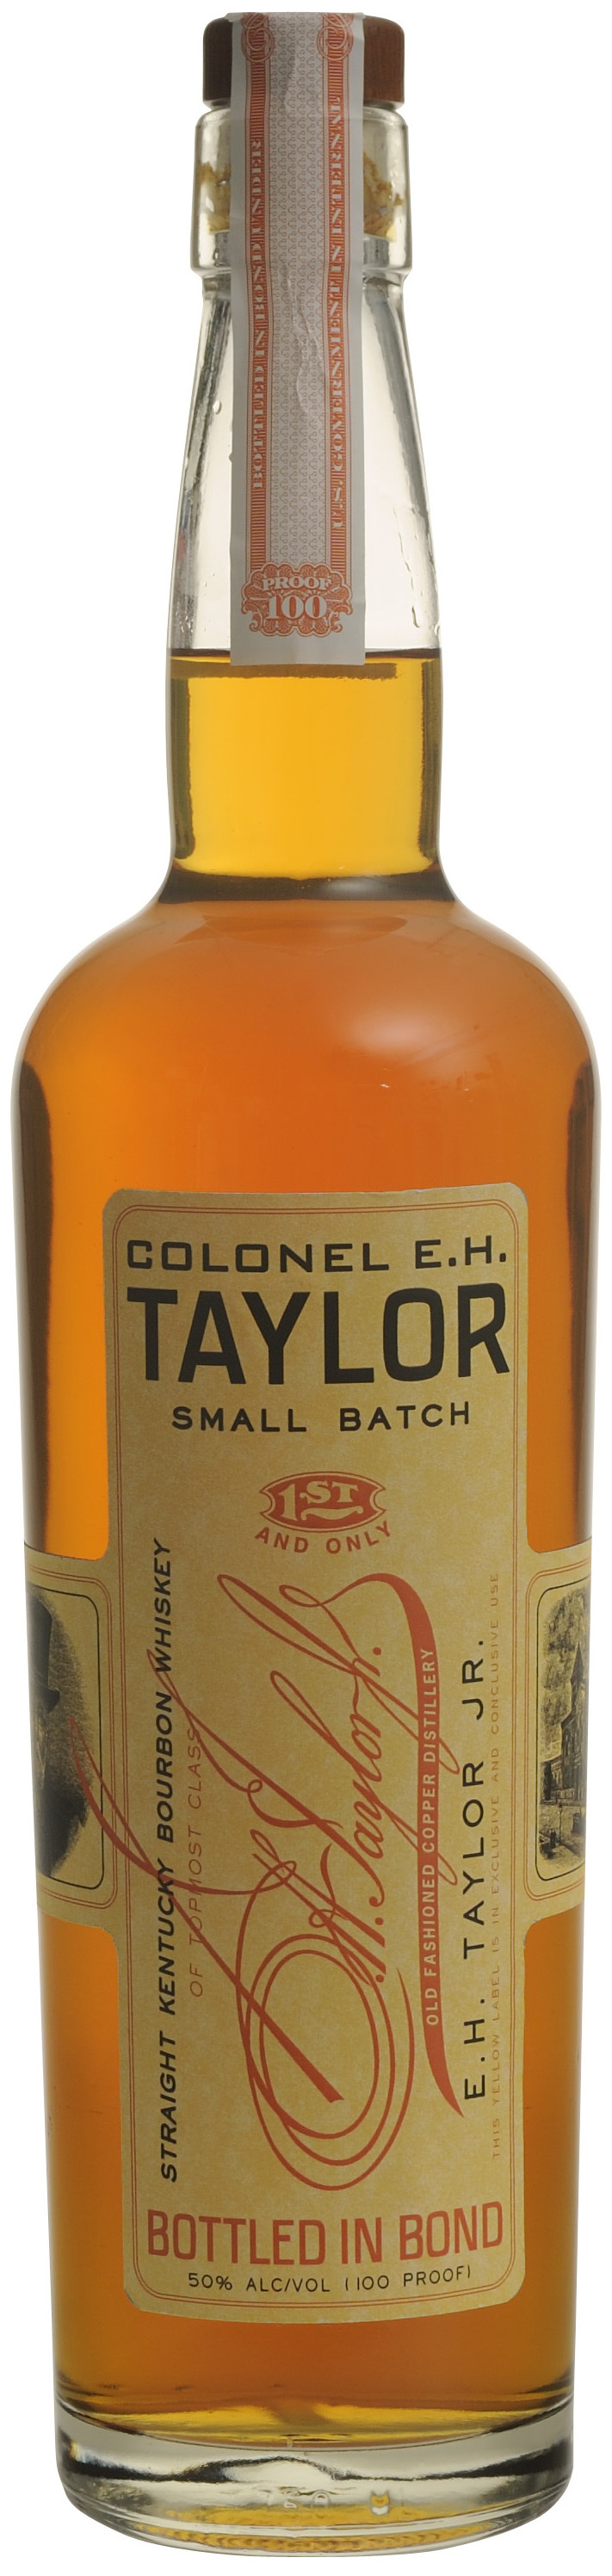 Colonel E.H. Taylor, Jr. Small Batch Bourbon